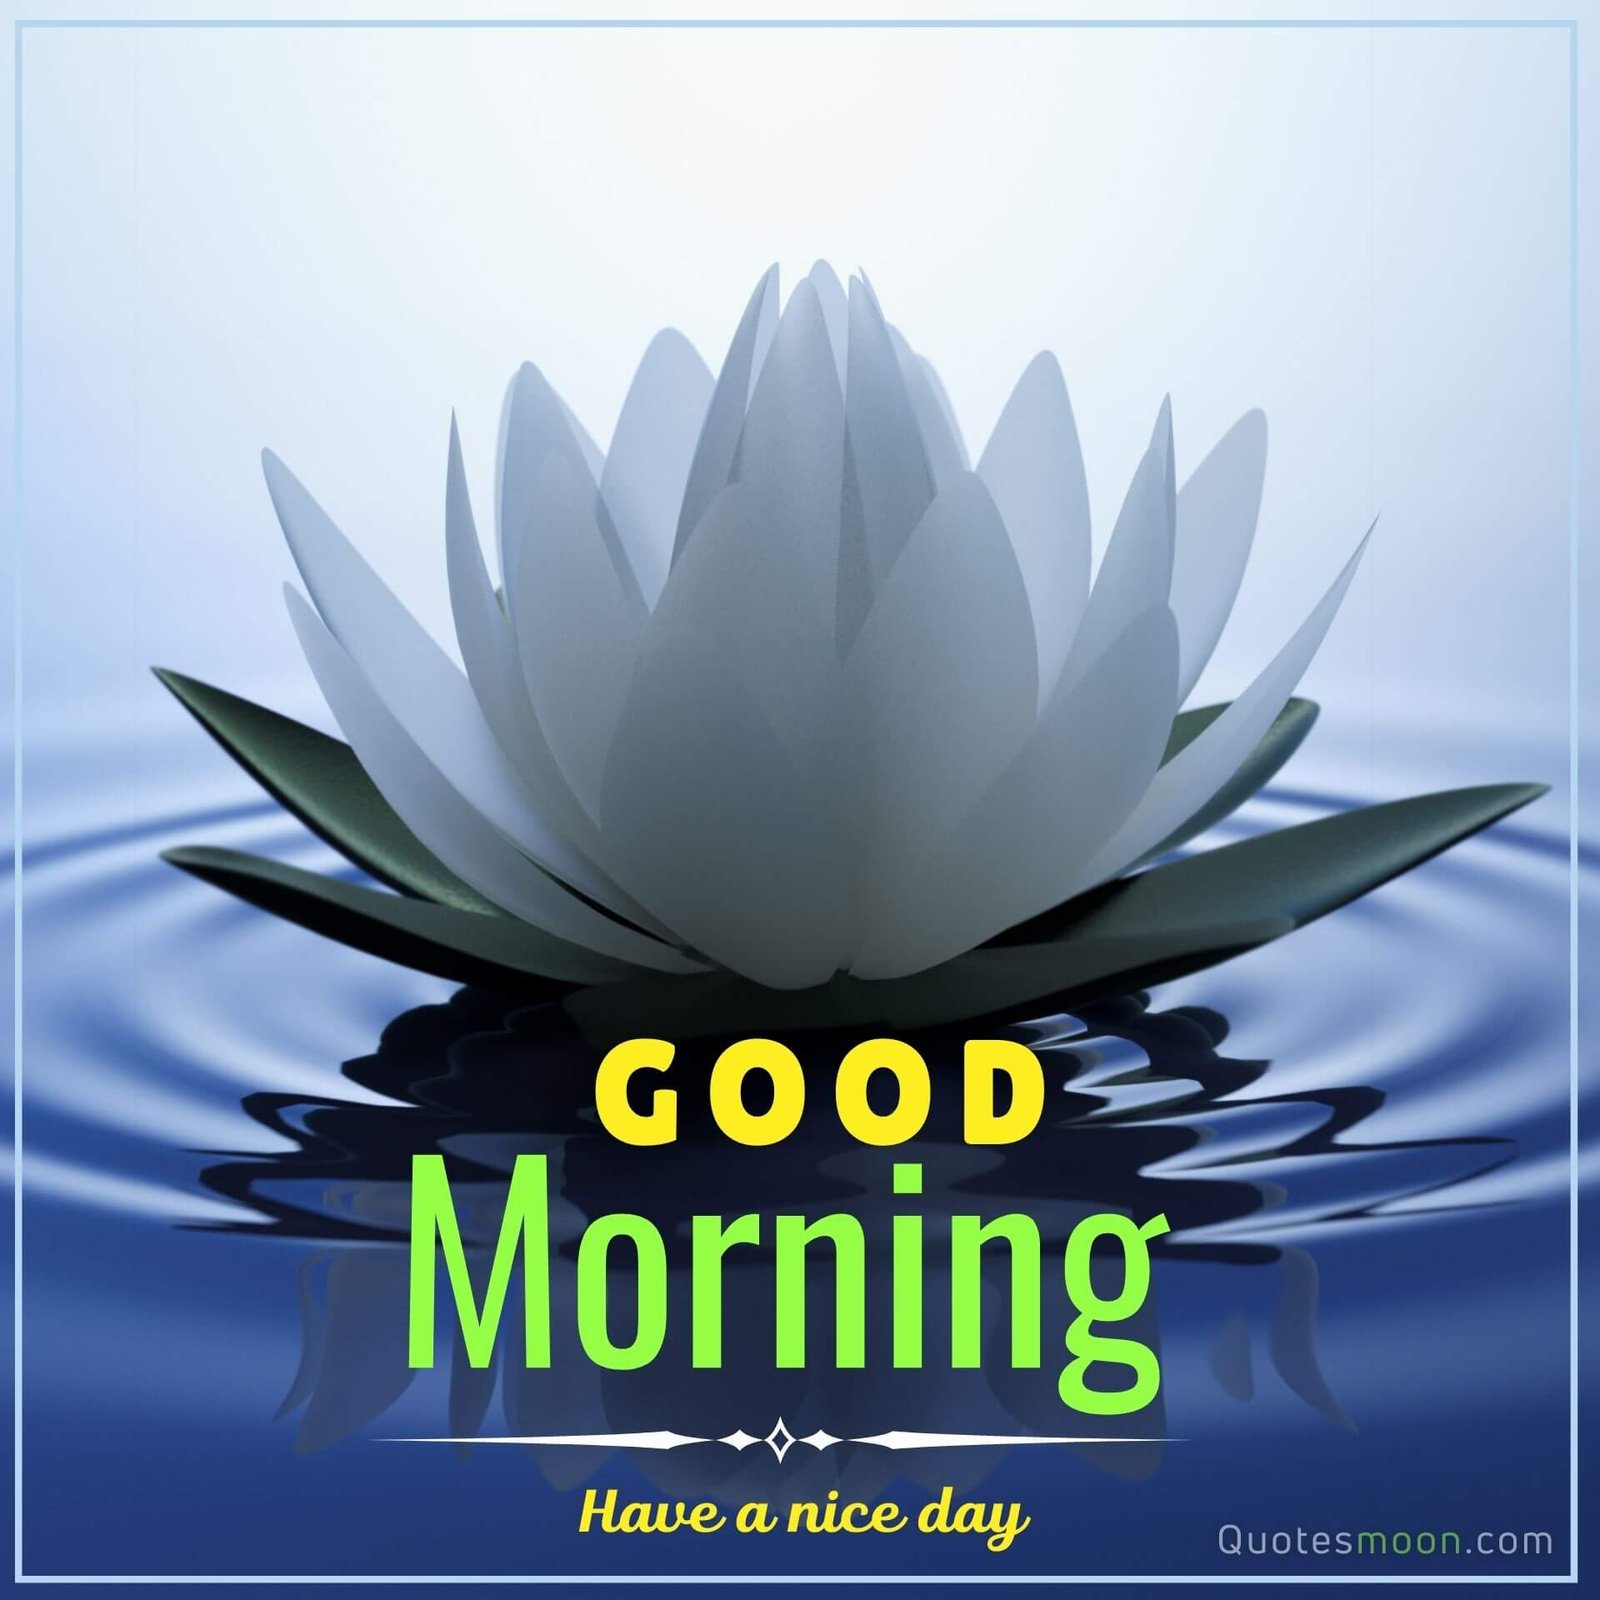  lotus morning wishes images